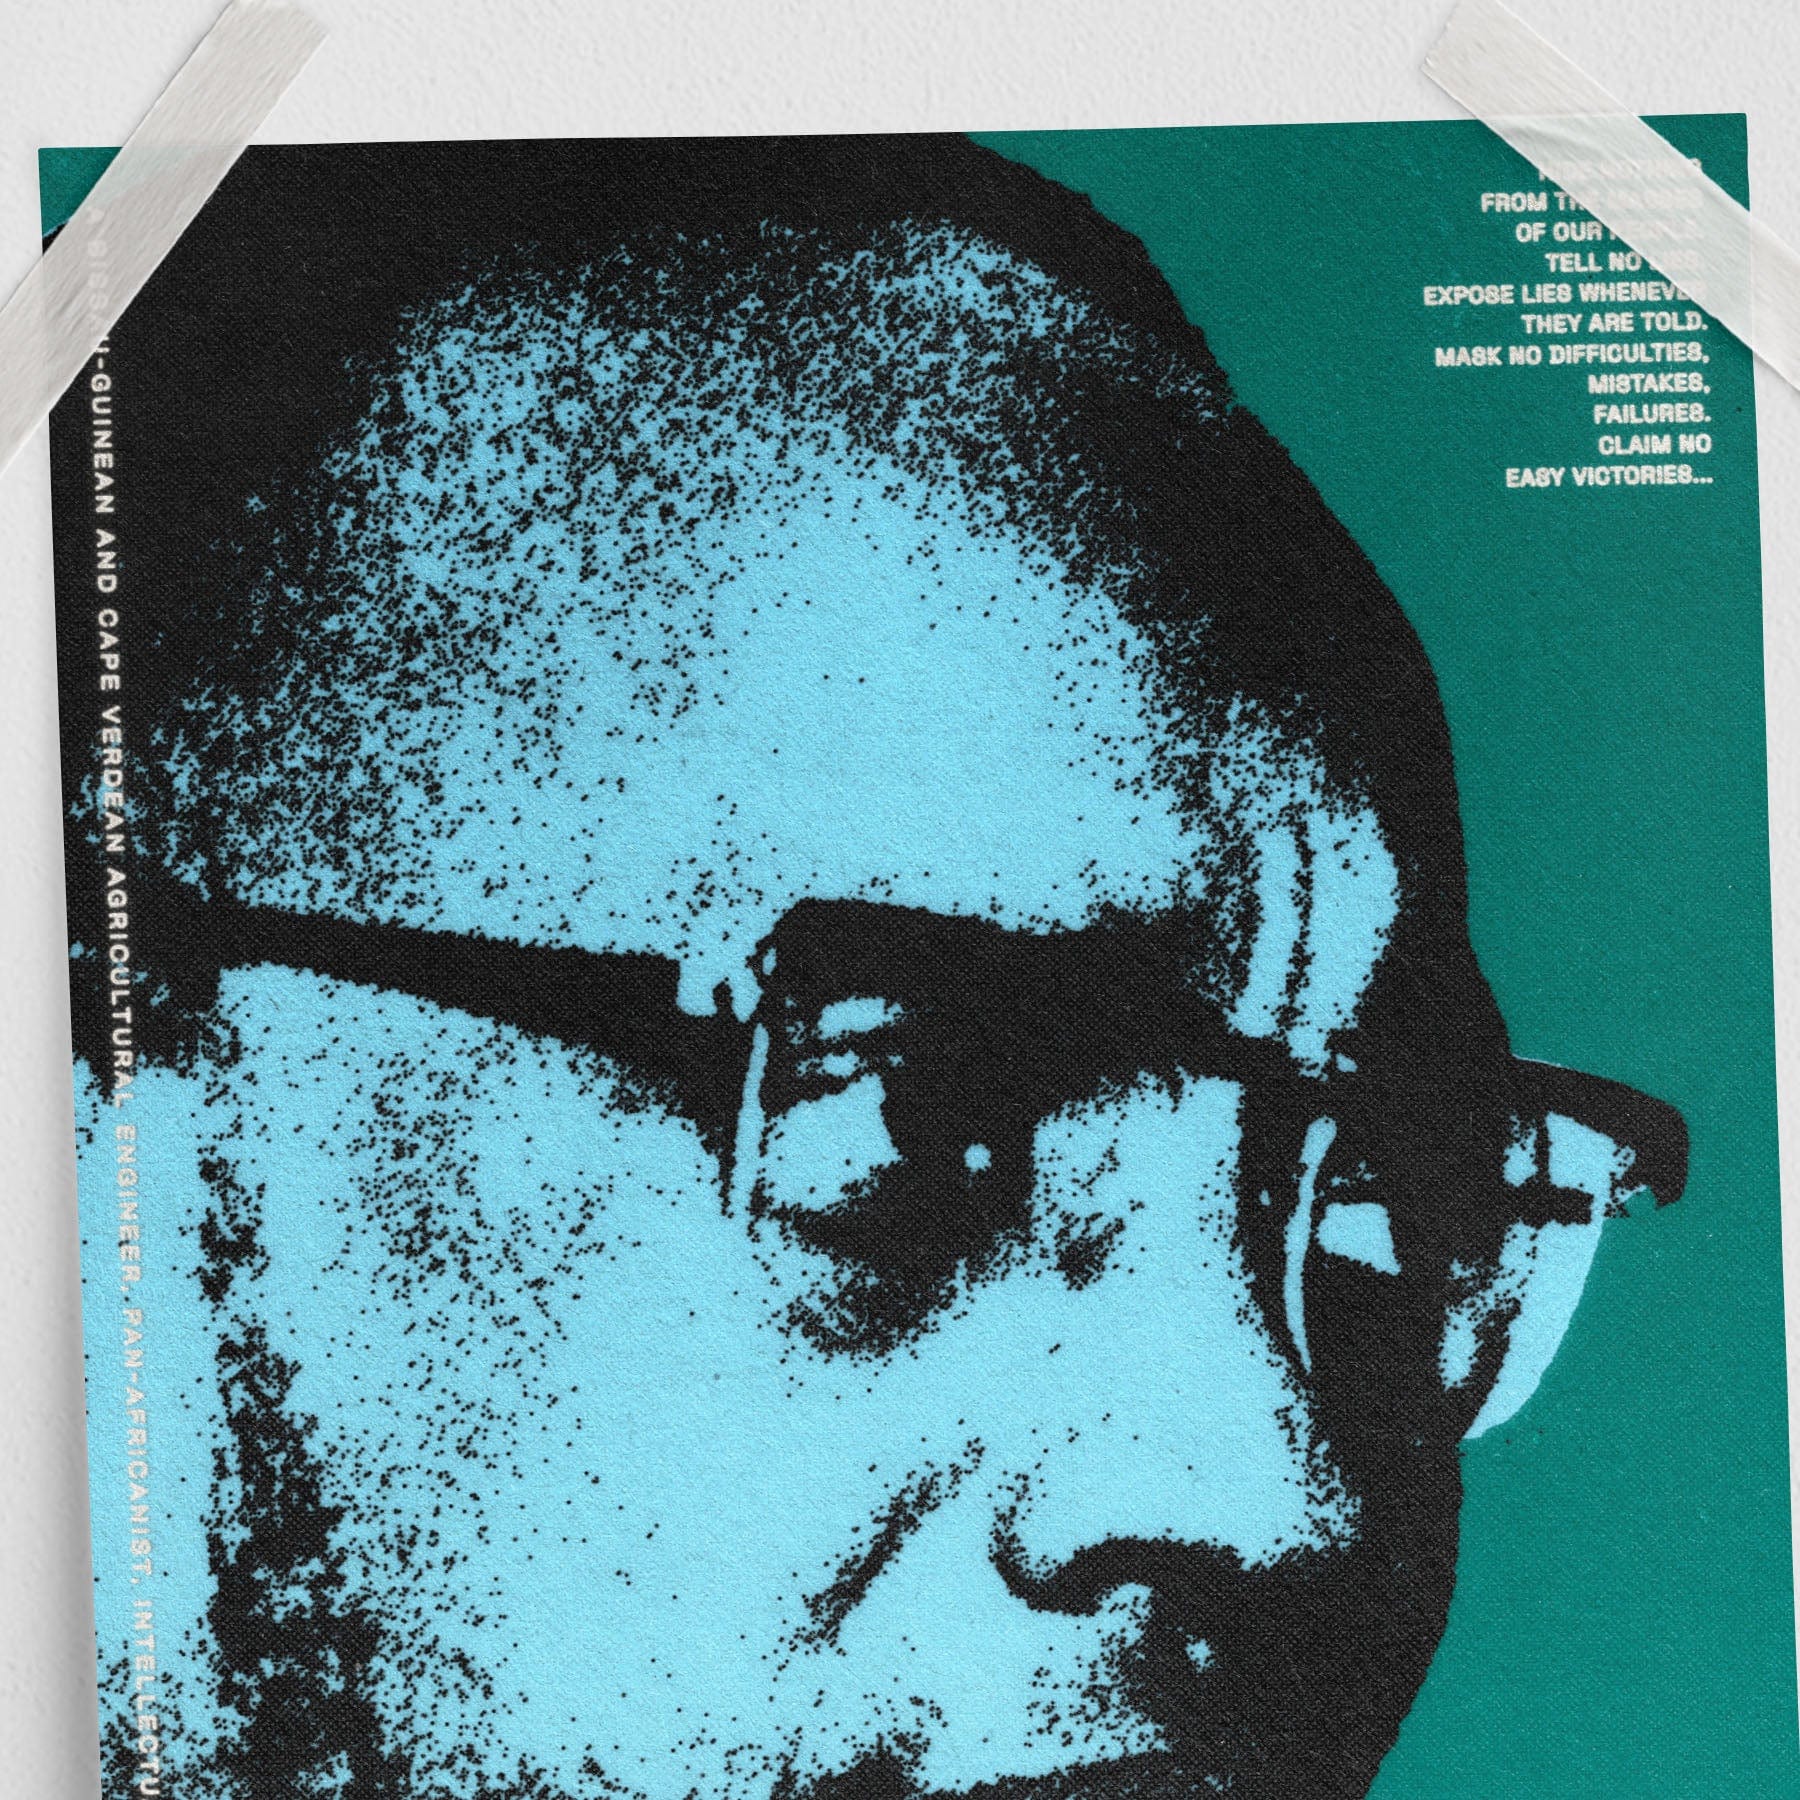 Amílcar Cabral (11 x 17 Poster print)